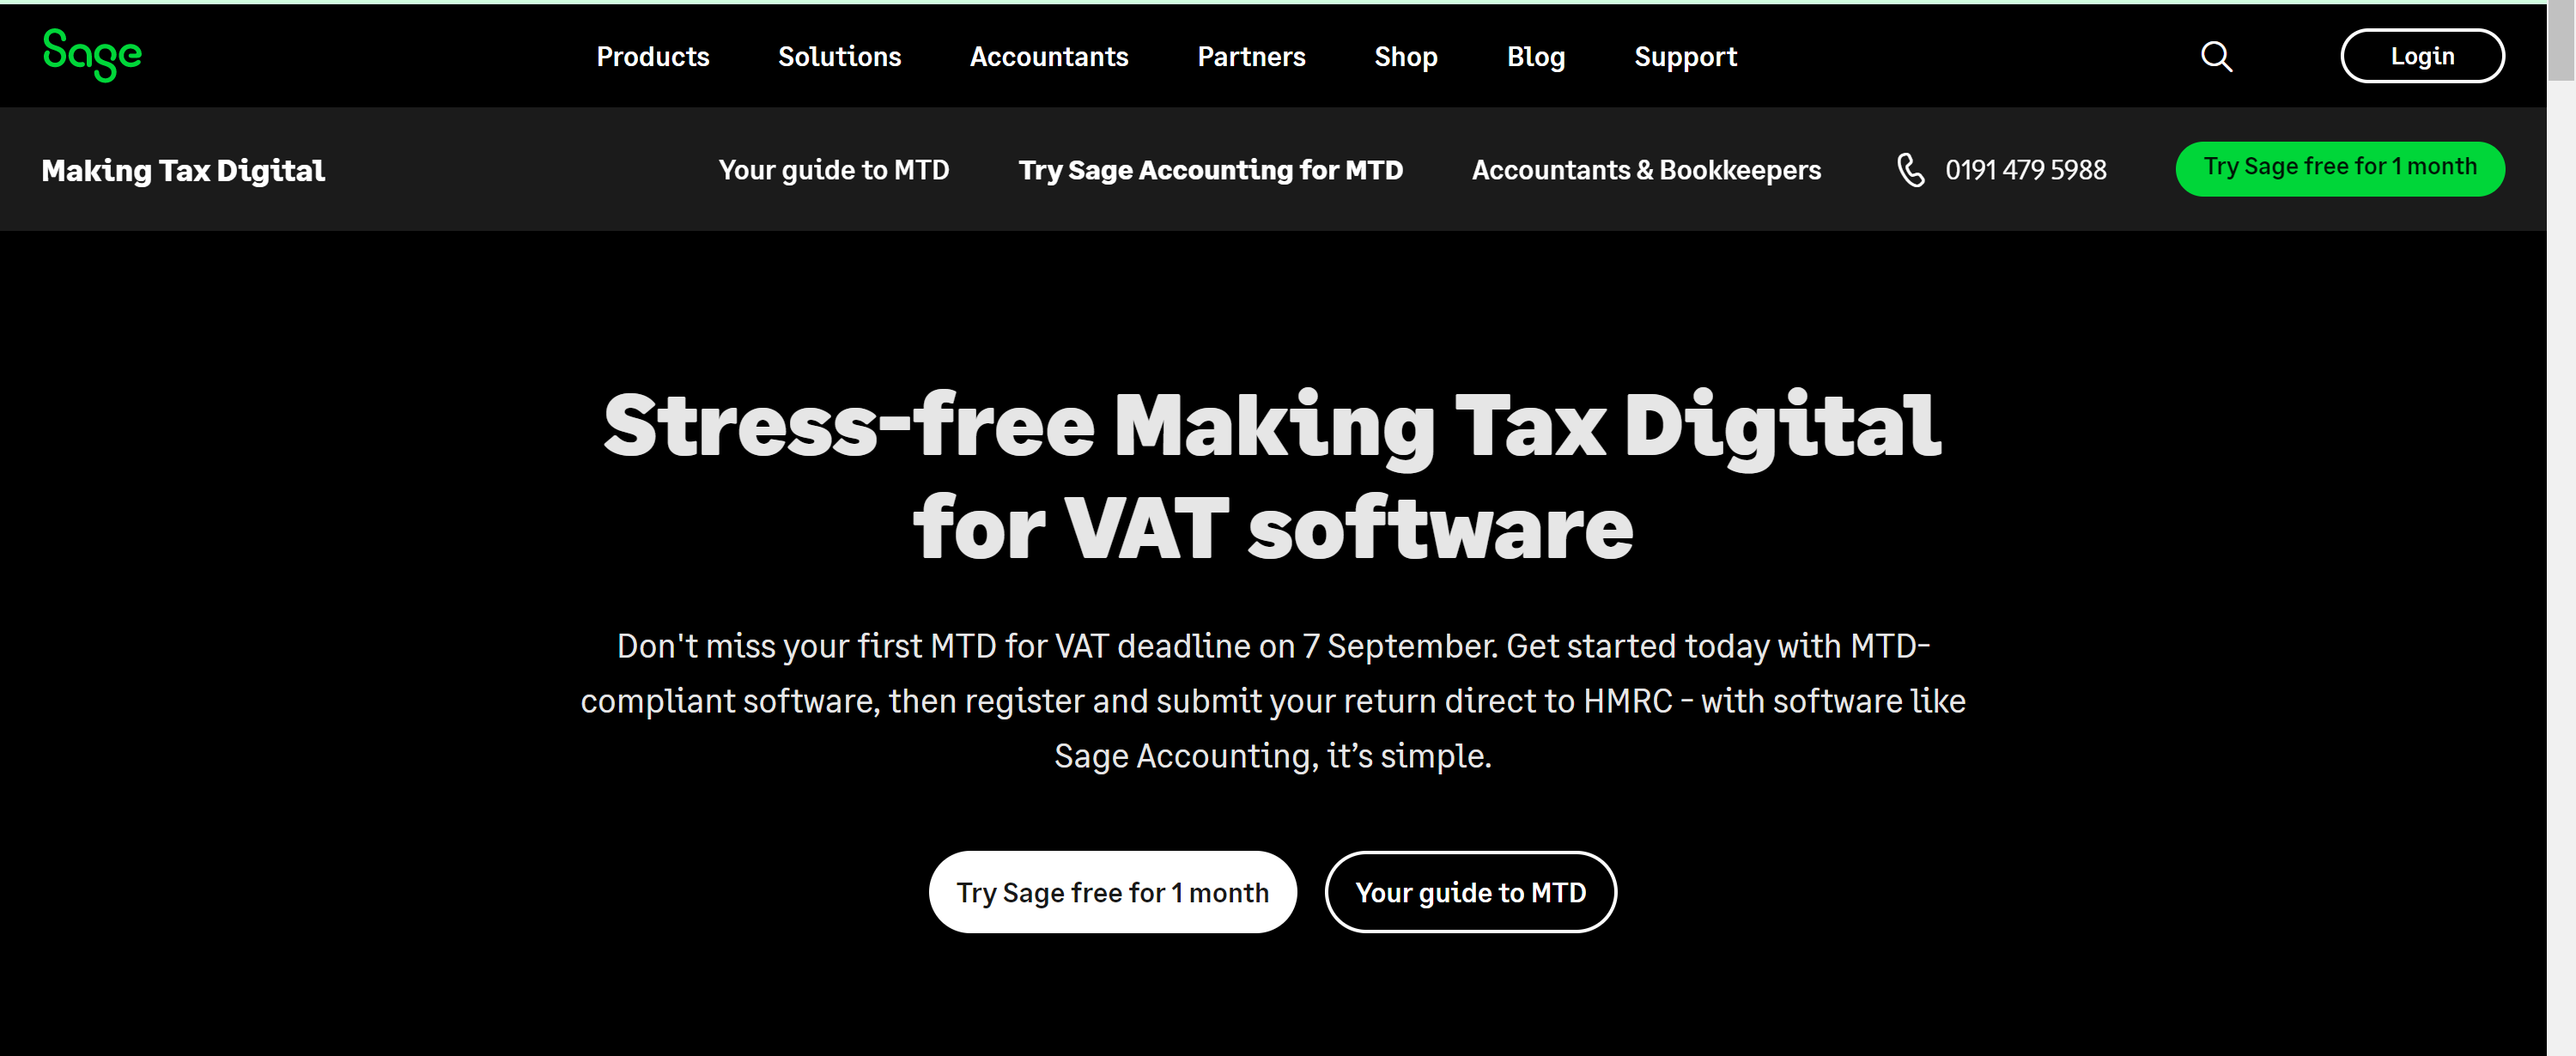 Sage Homepage for Making Tax Digital